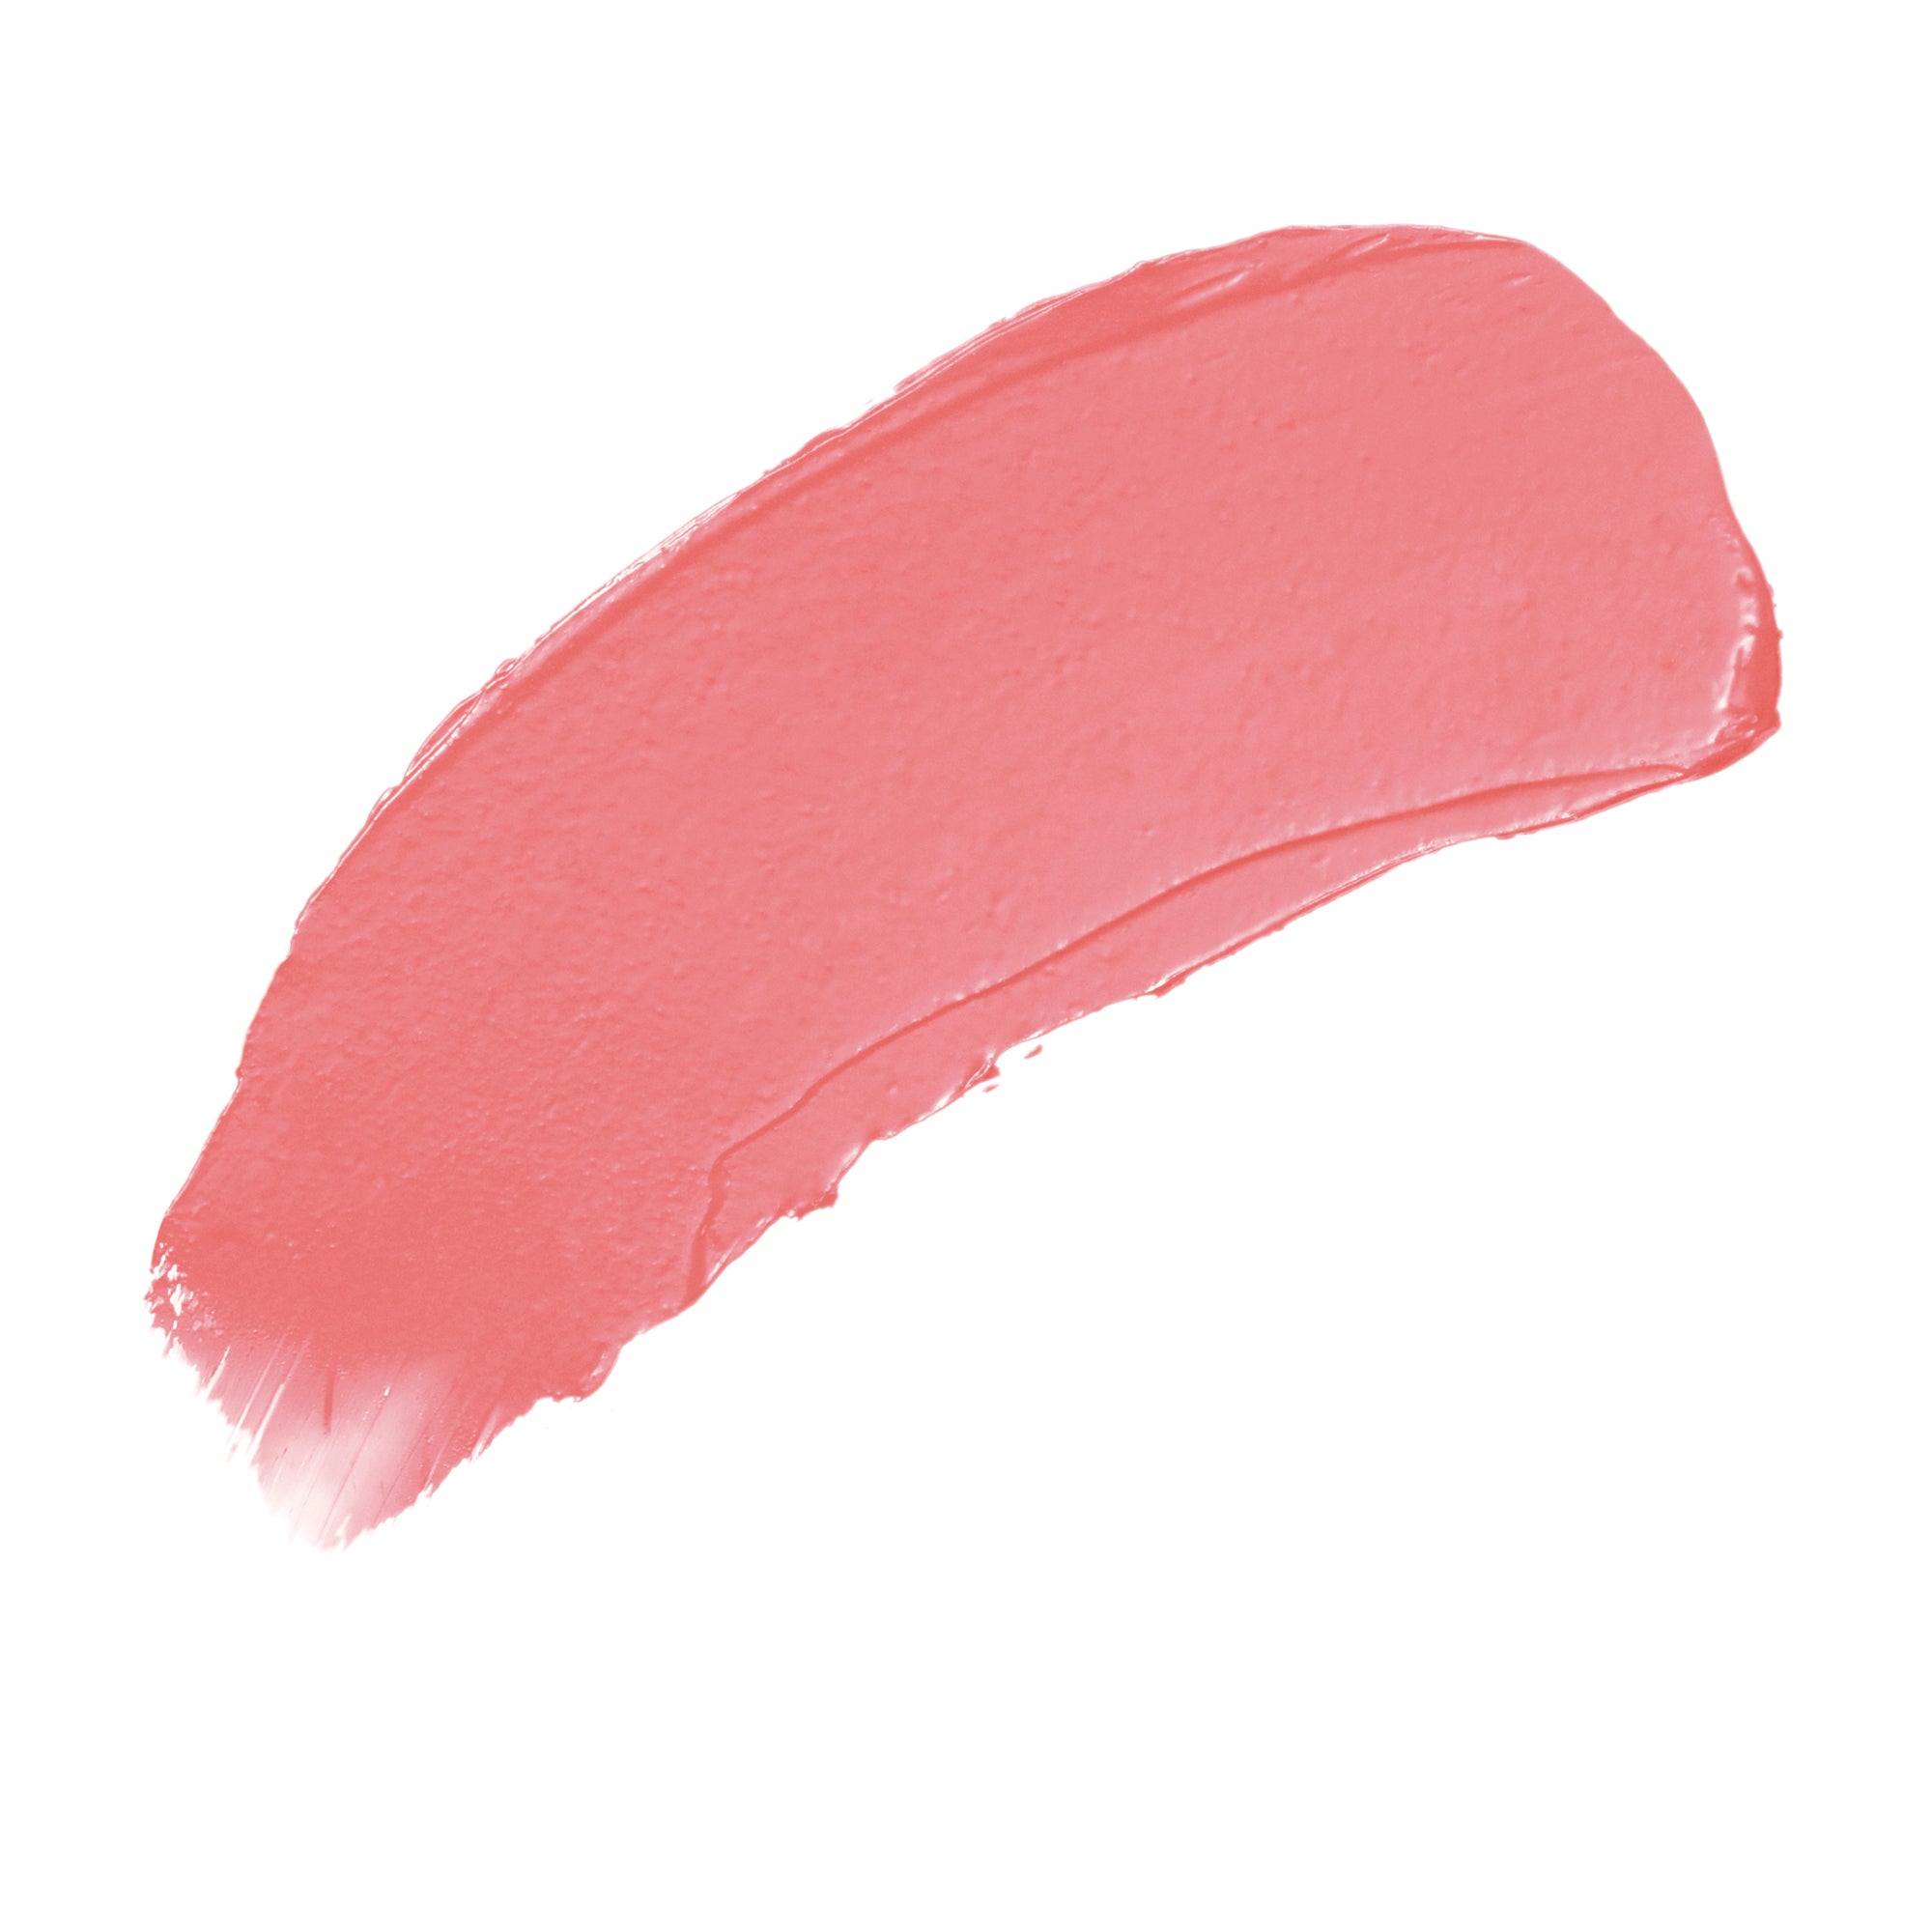 Jane Iredale Triple Luxe Long Lasting Naturally Moist Lipstick / SAKURE